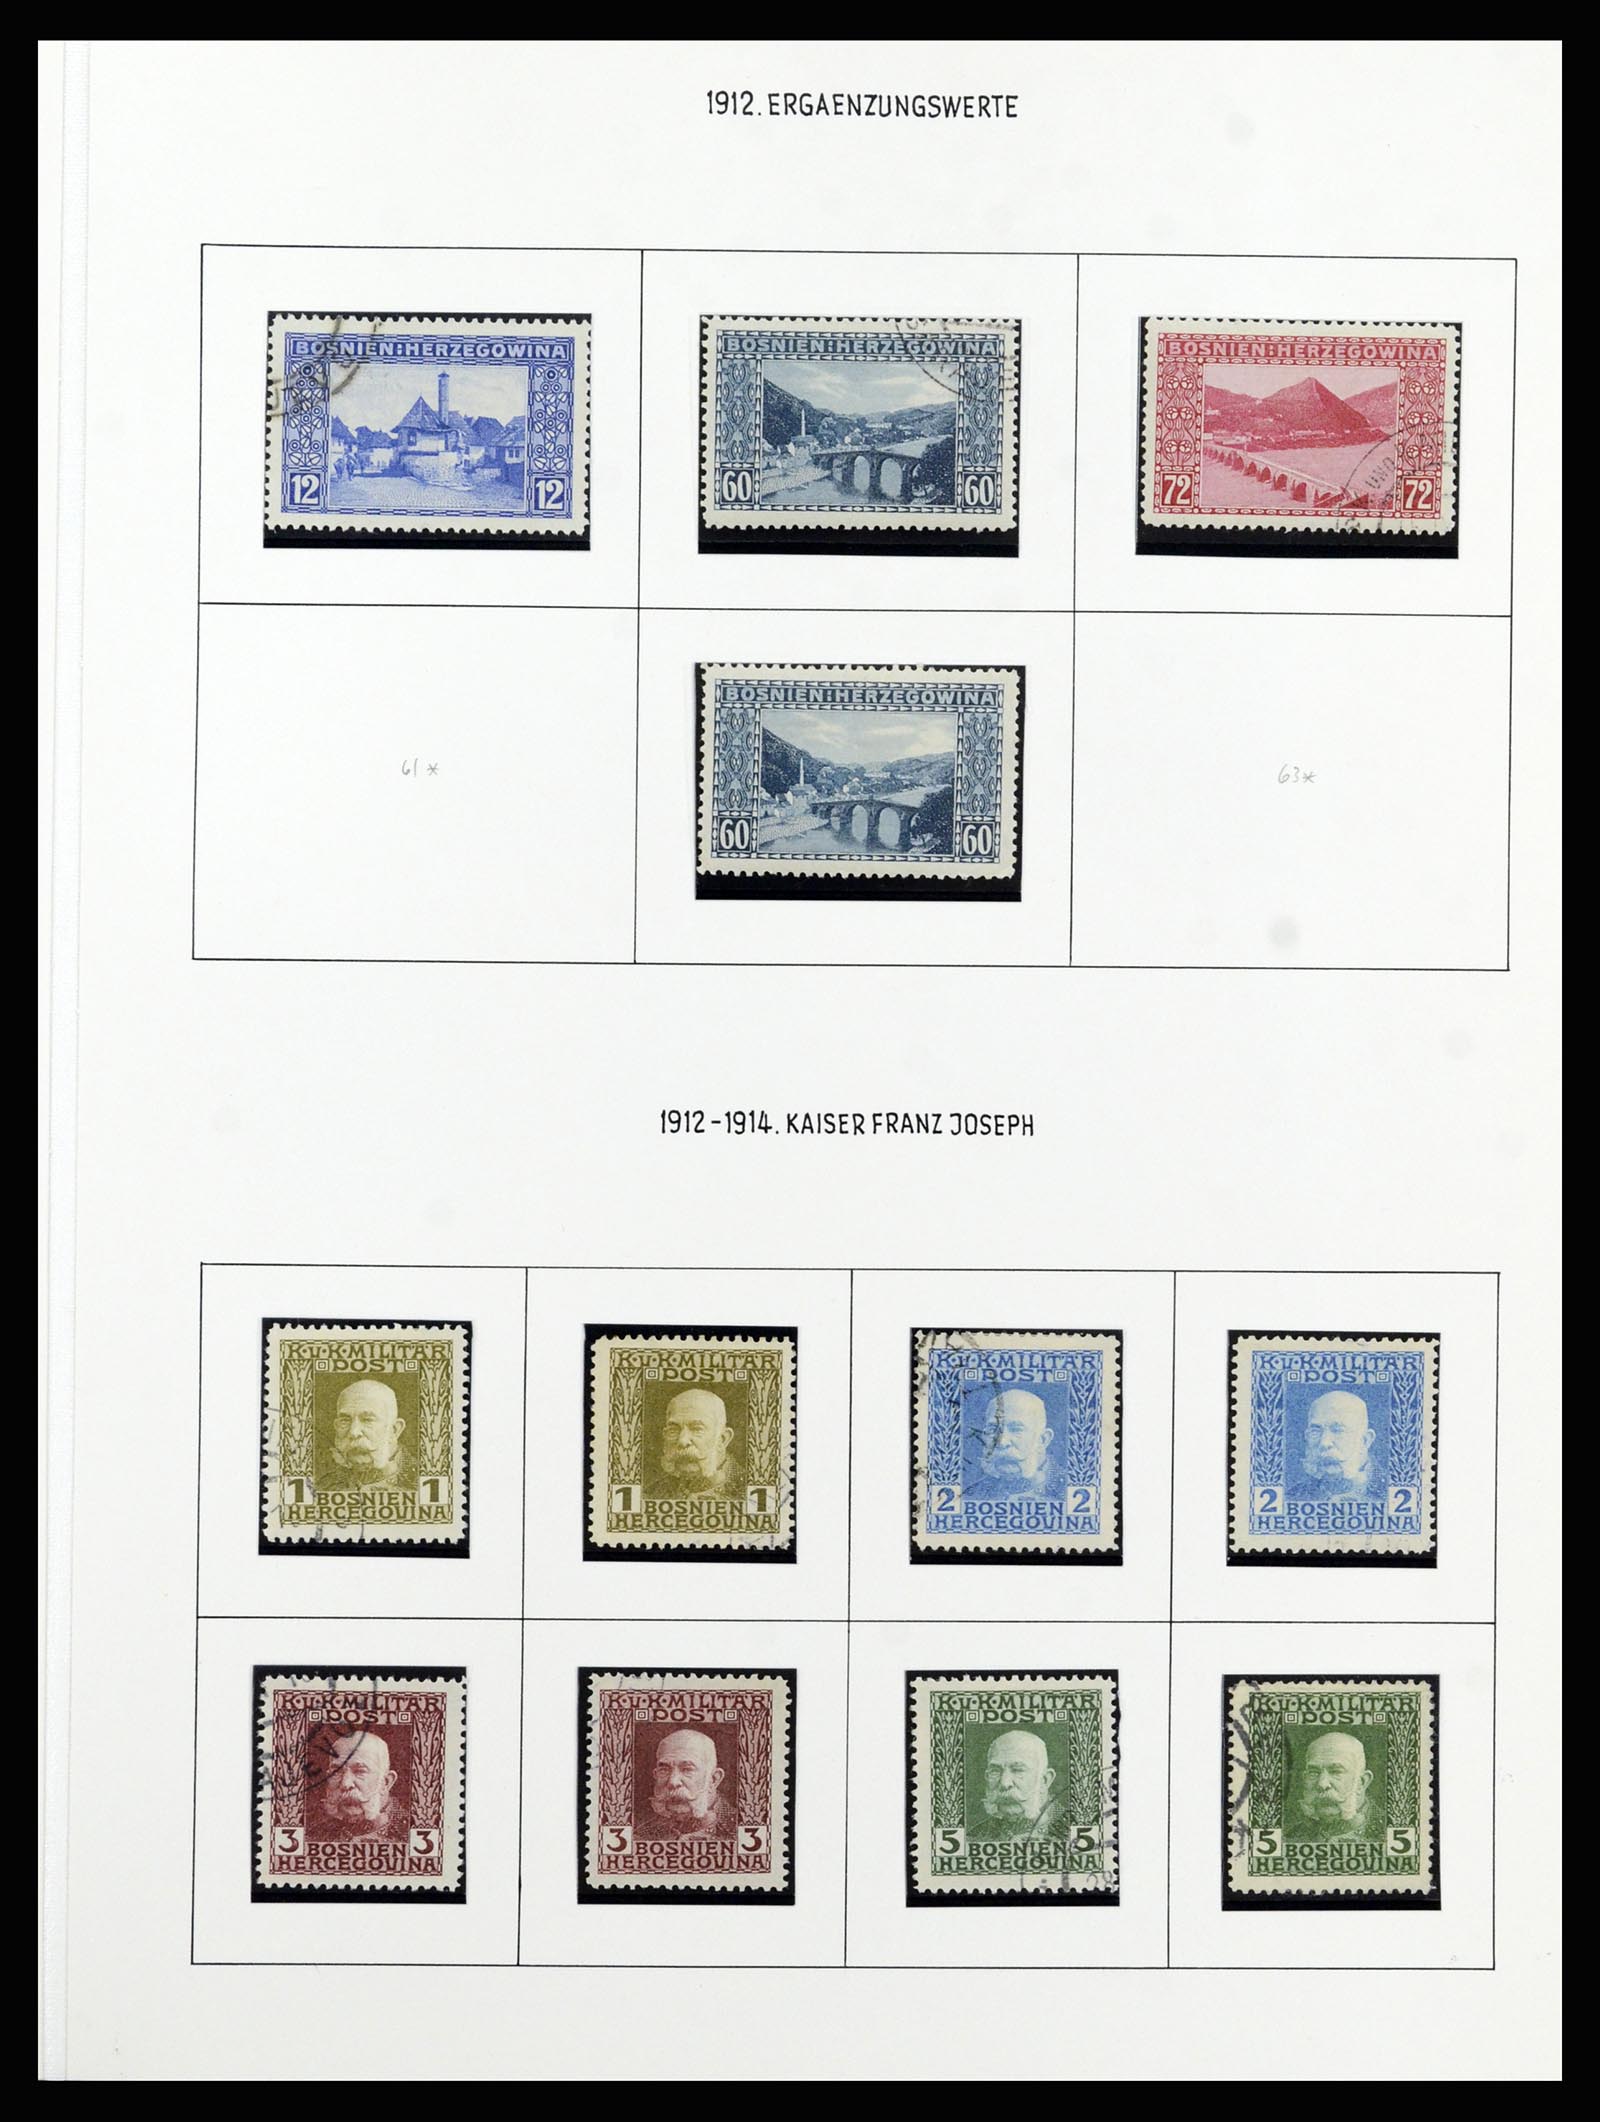 37141 021 - Stamp collection 37141 Bosnia Herzegovina 1879-1918.